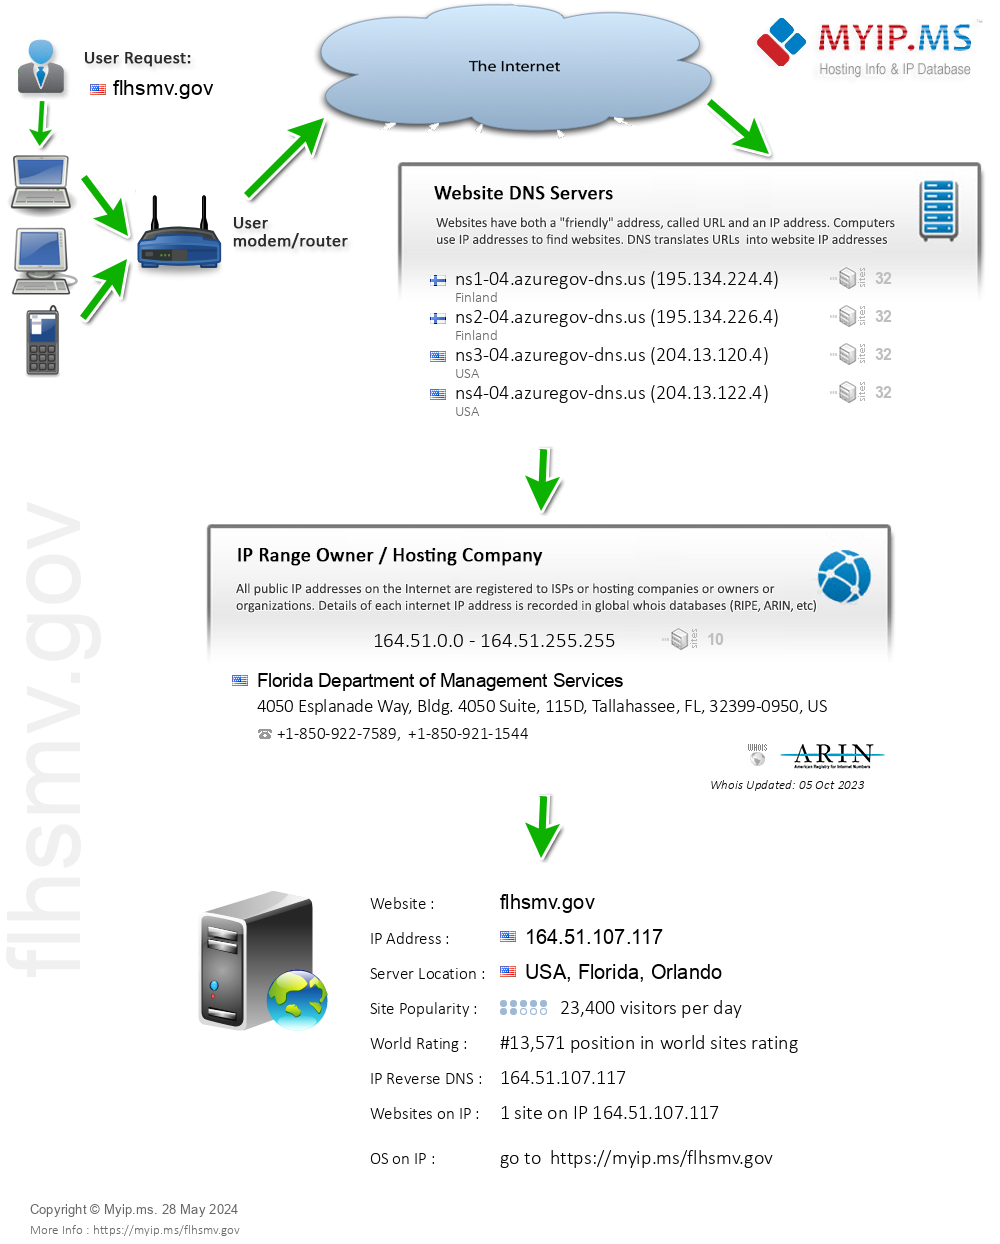 Flhsmv.gov - Website Hosting Visual IP Diagram